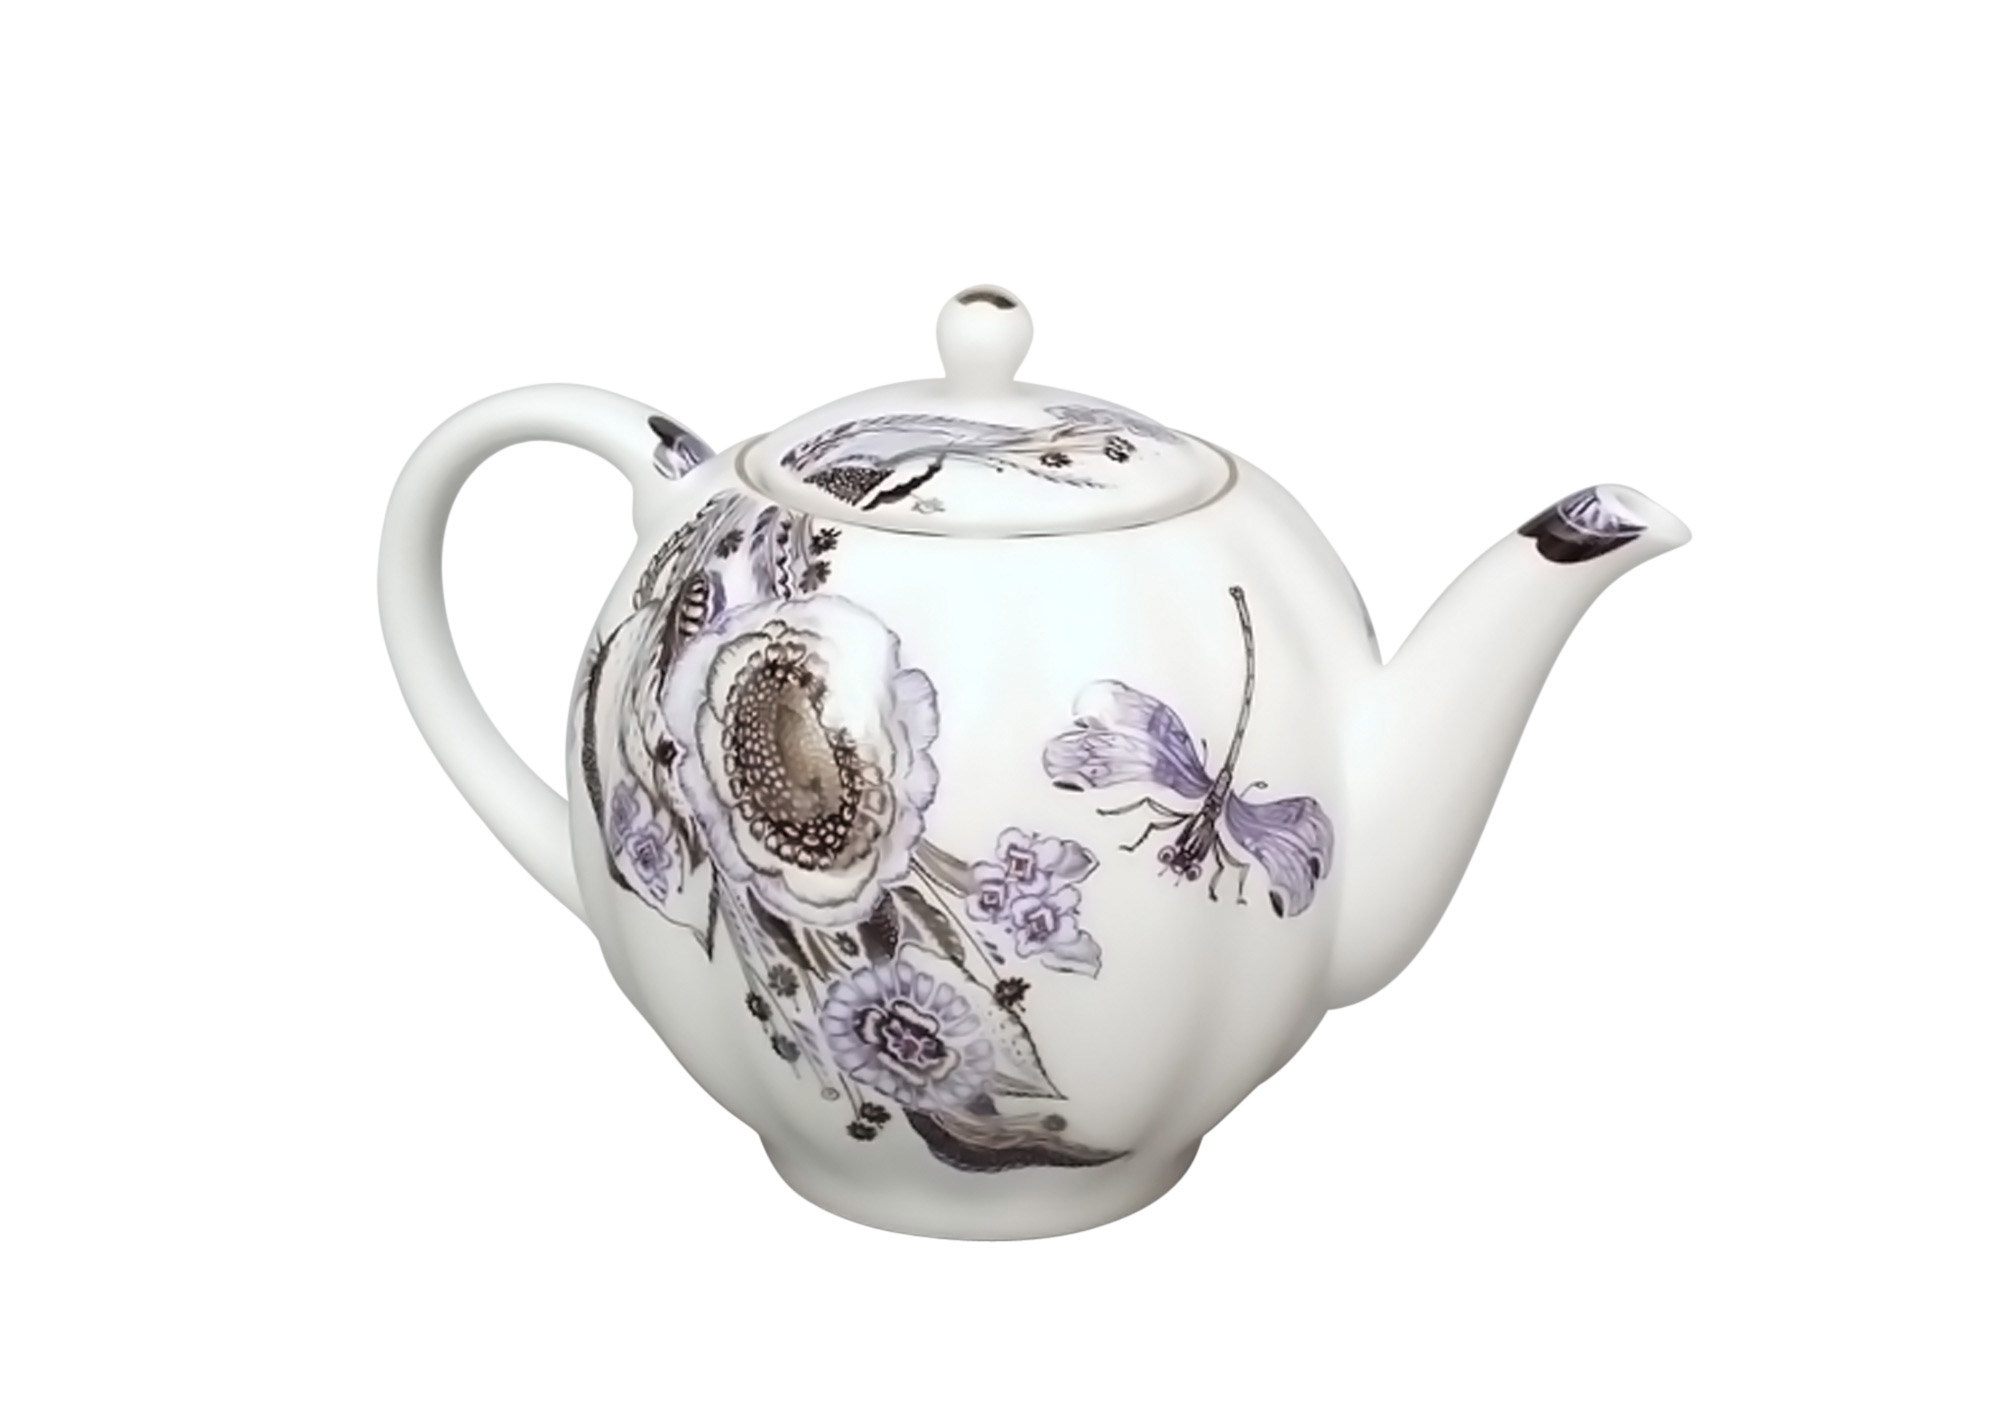 Buy Dragonfly teapot, 3 cup at GoldenCockerel.com